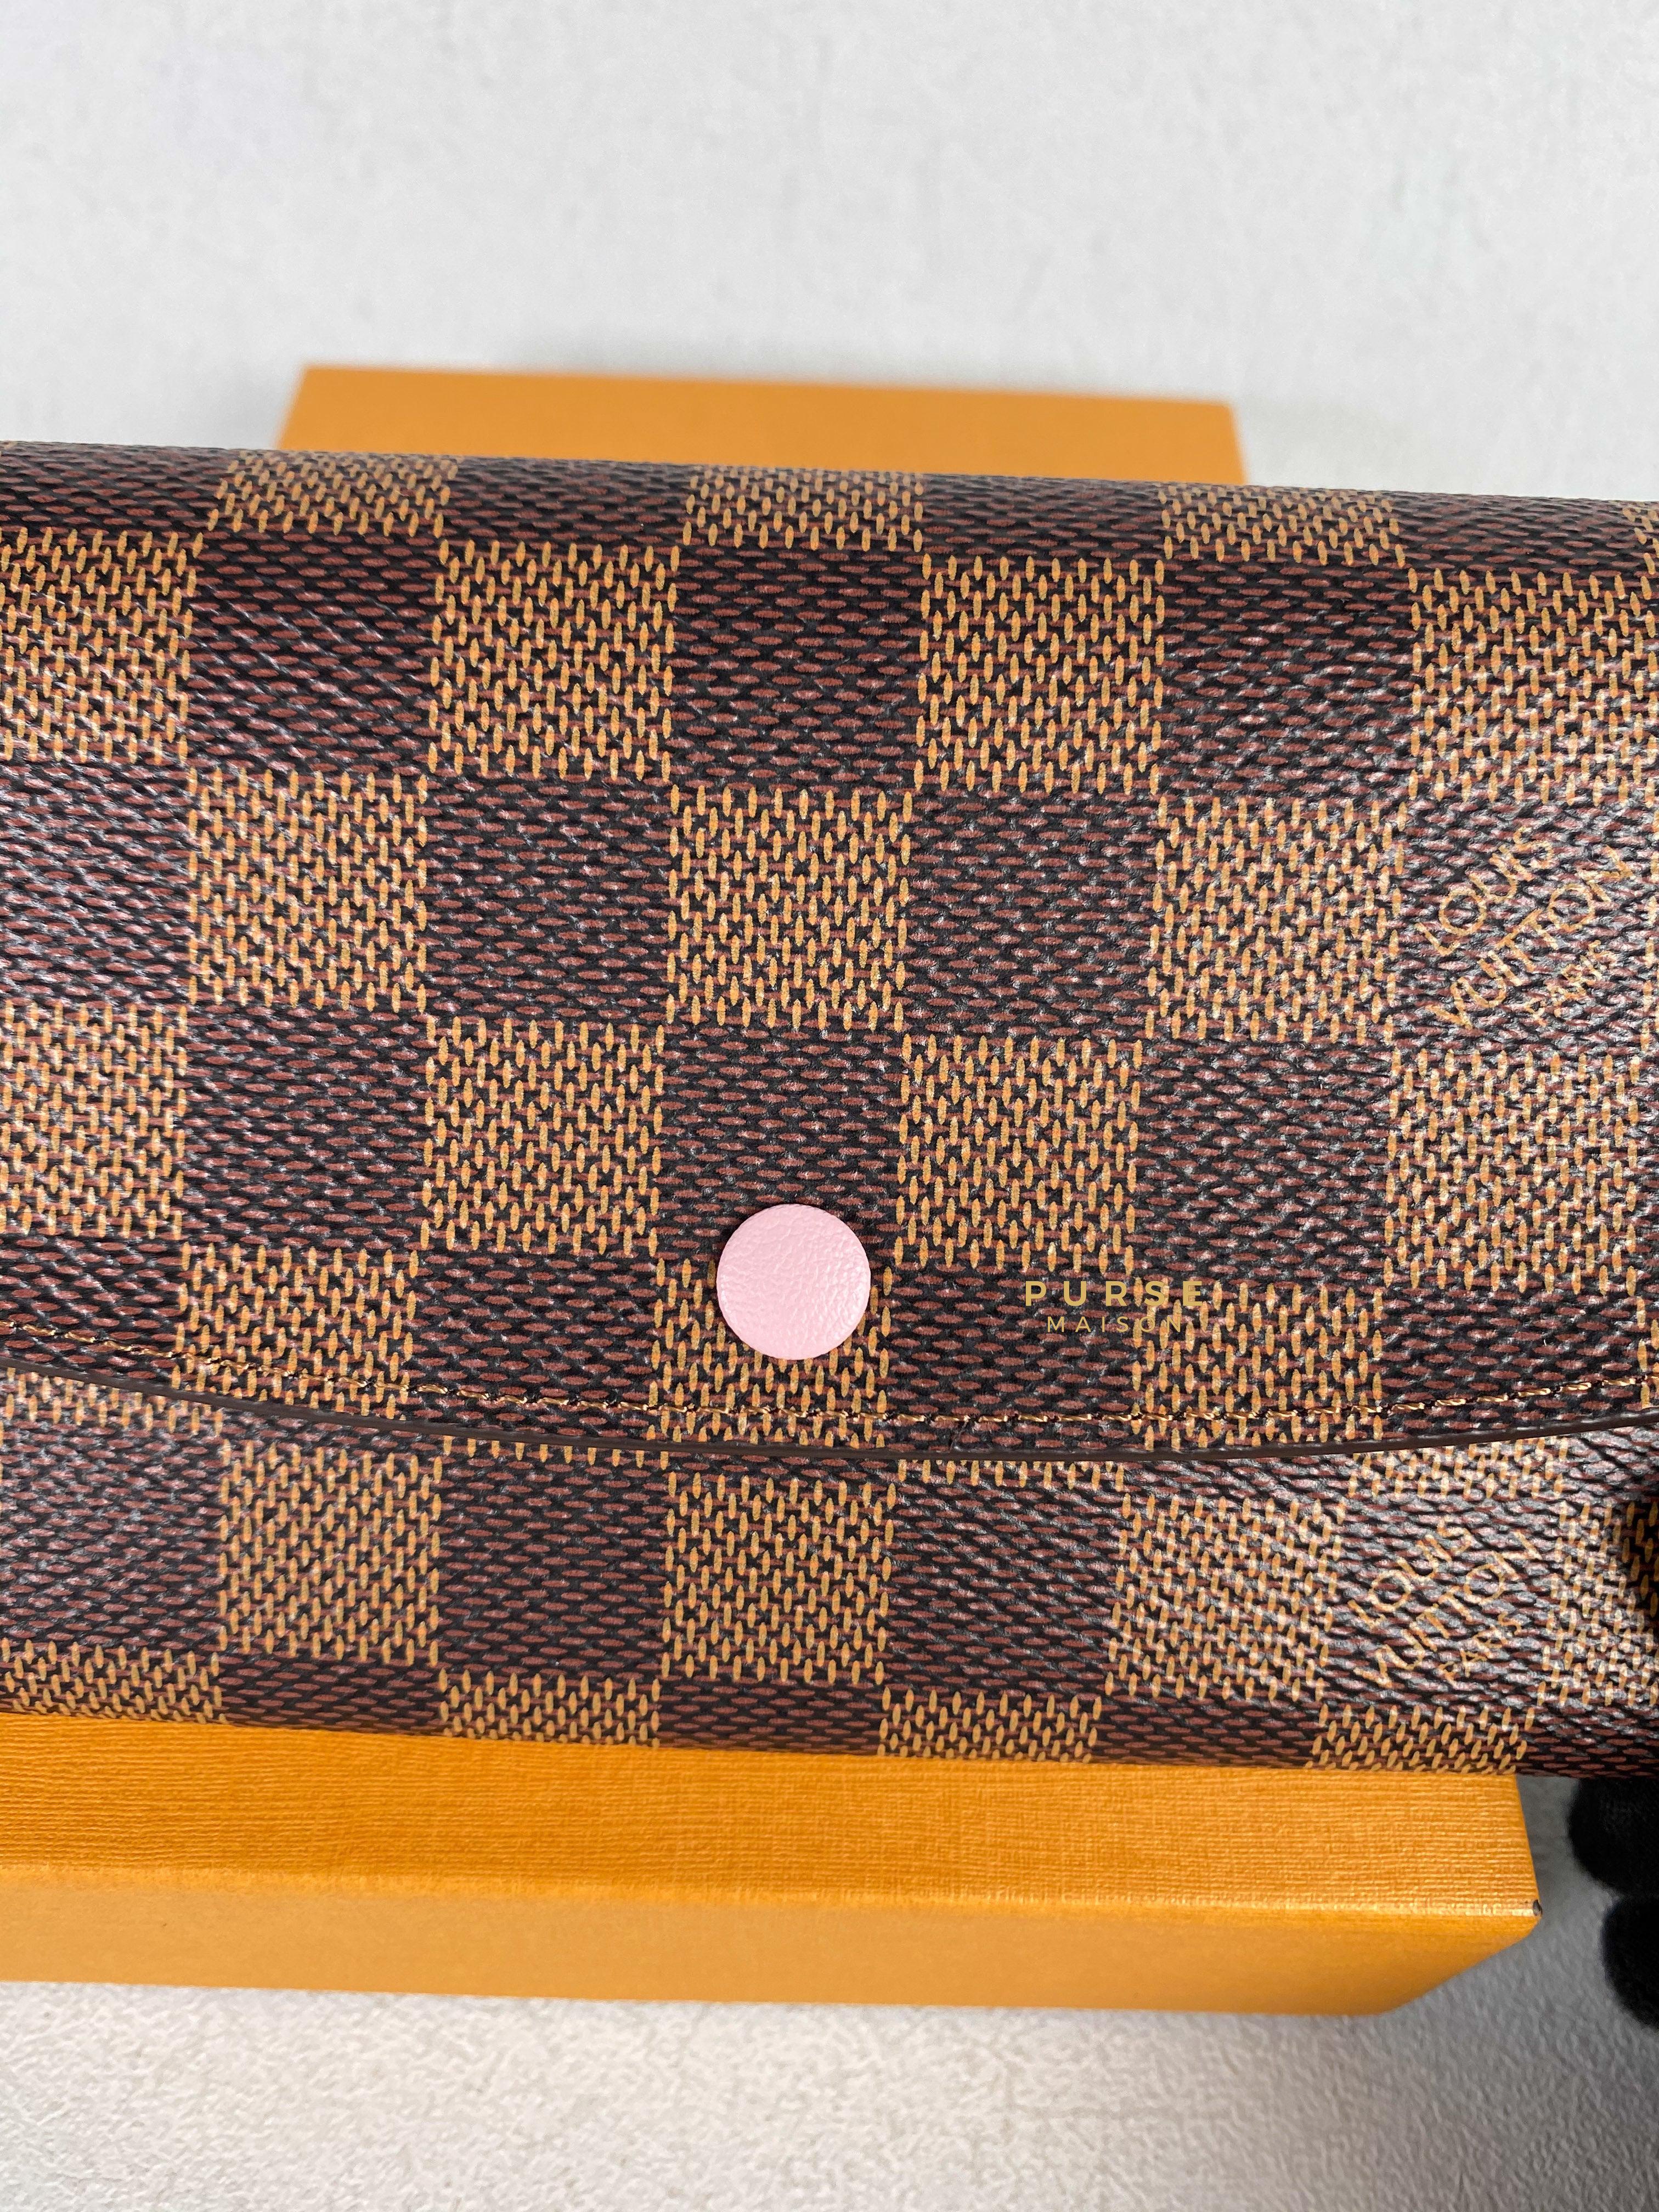 Louis Vuitton Emilie Wallet in Monogram Canvas and Rose Ballerine (Microchip) | Purse Maison Luxury Bags Shop